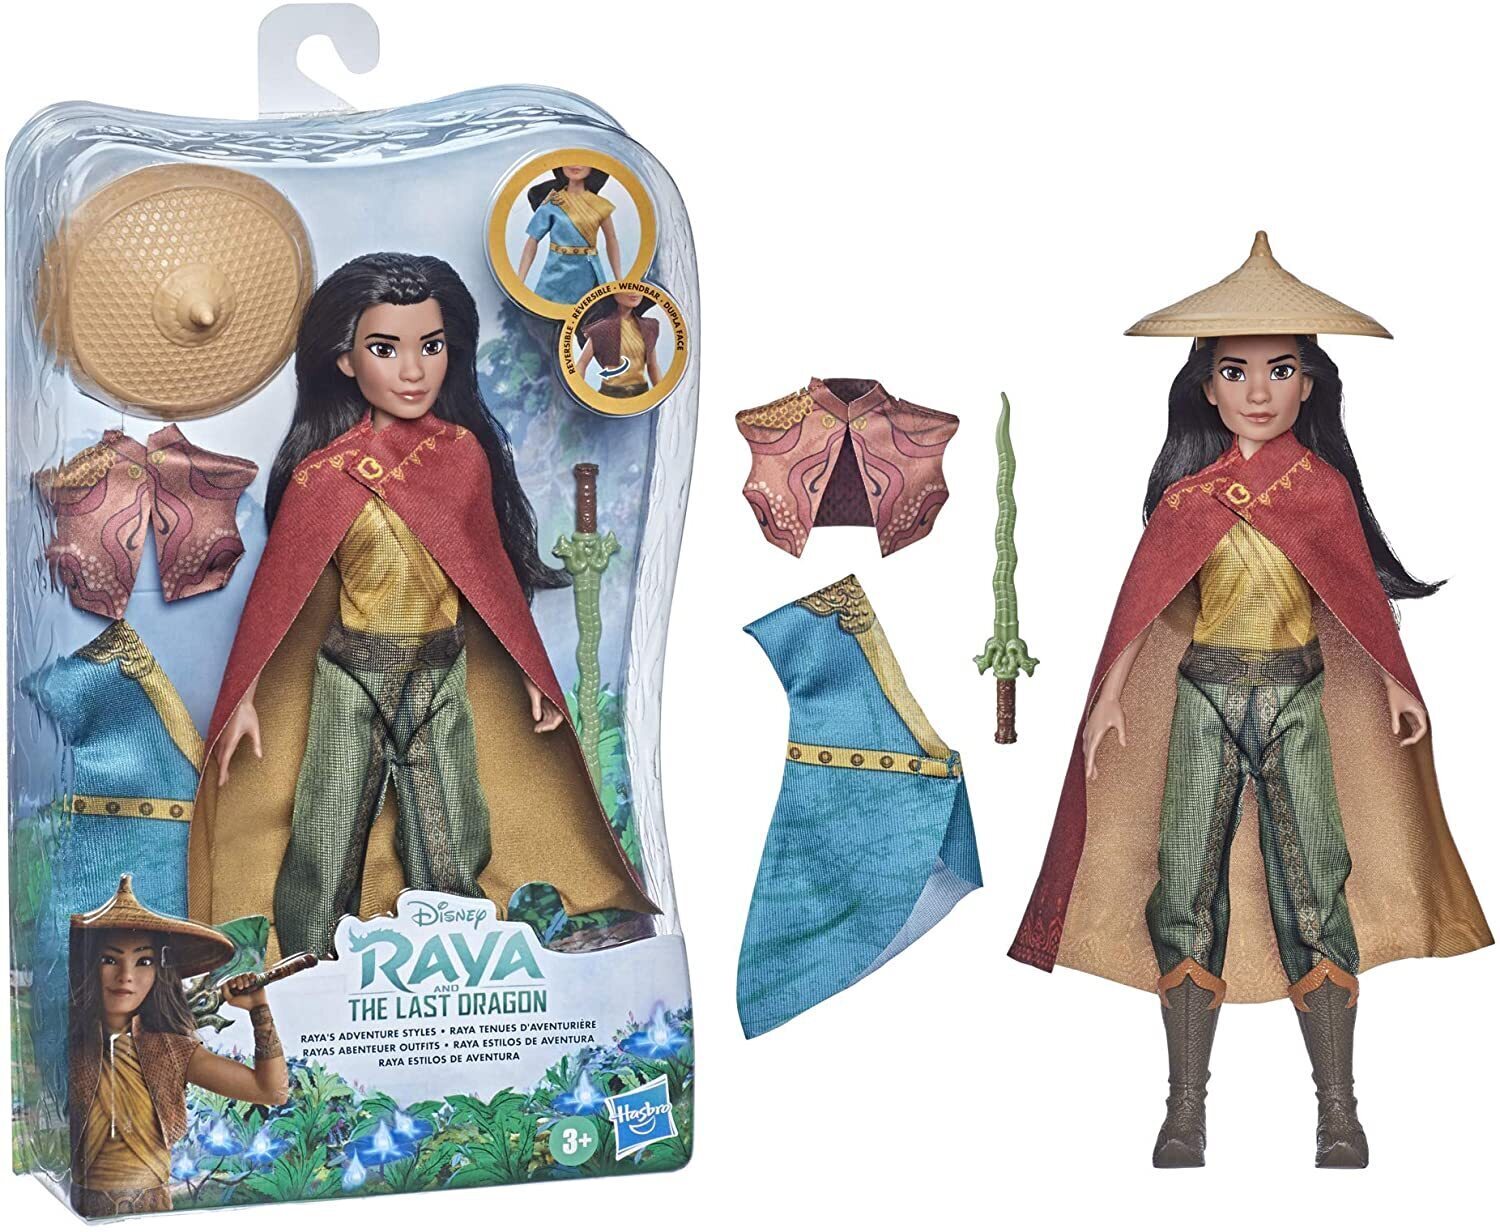 Disney Princess Raya and the Last Dragon Raya's Adventure Styles